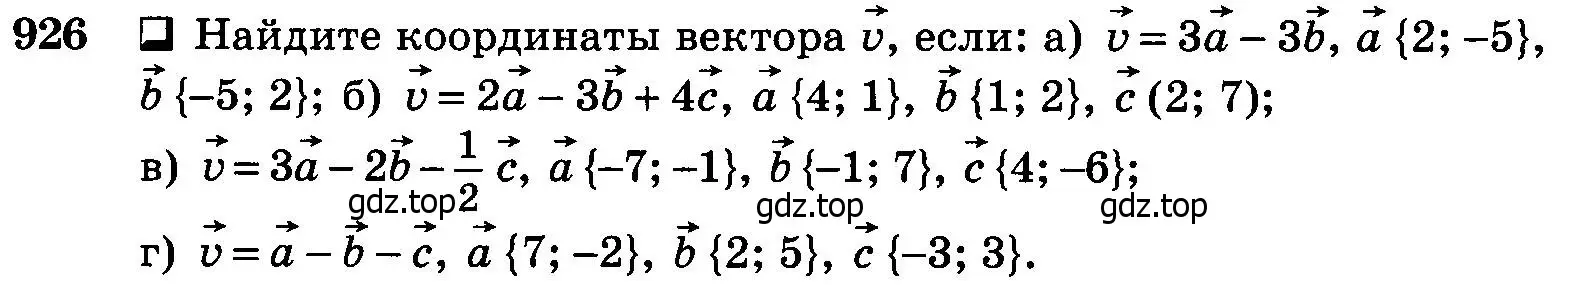 Условие номер 926 (страница 228) гдз по геометрии 7-9 класс Атанасян, Бутузов, учебник